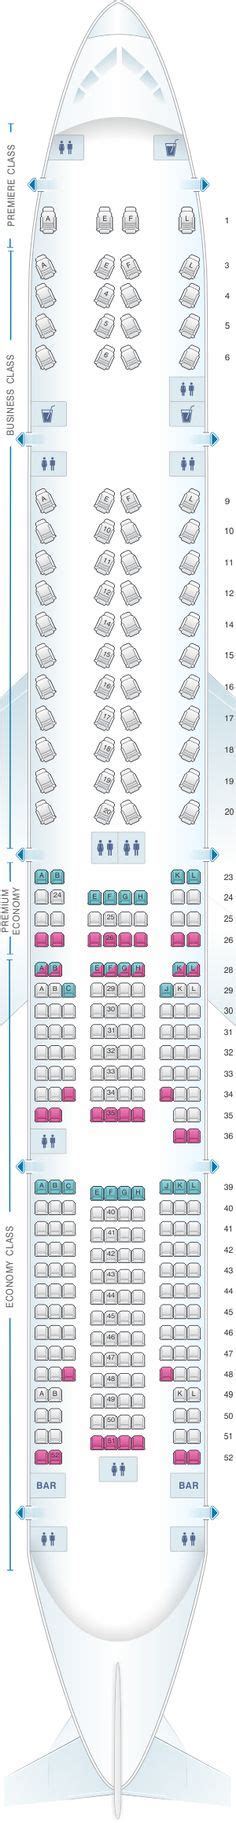 Seat Map Scandinavian Airlines Sas Bombardier Canadair Crj 900